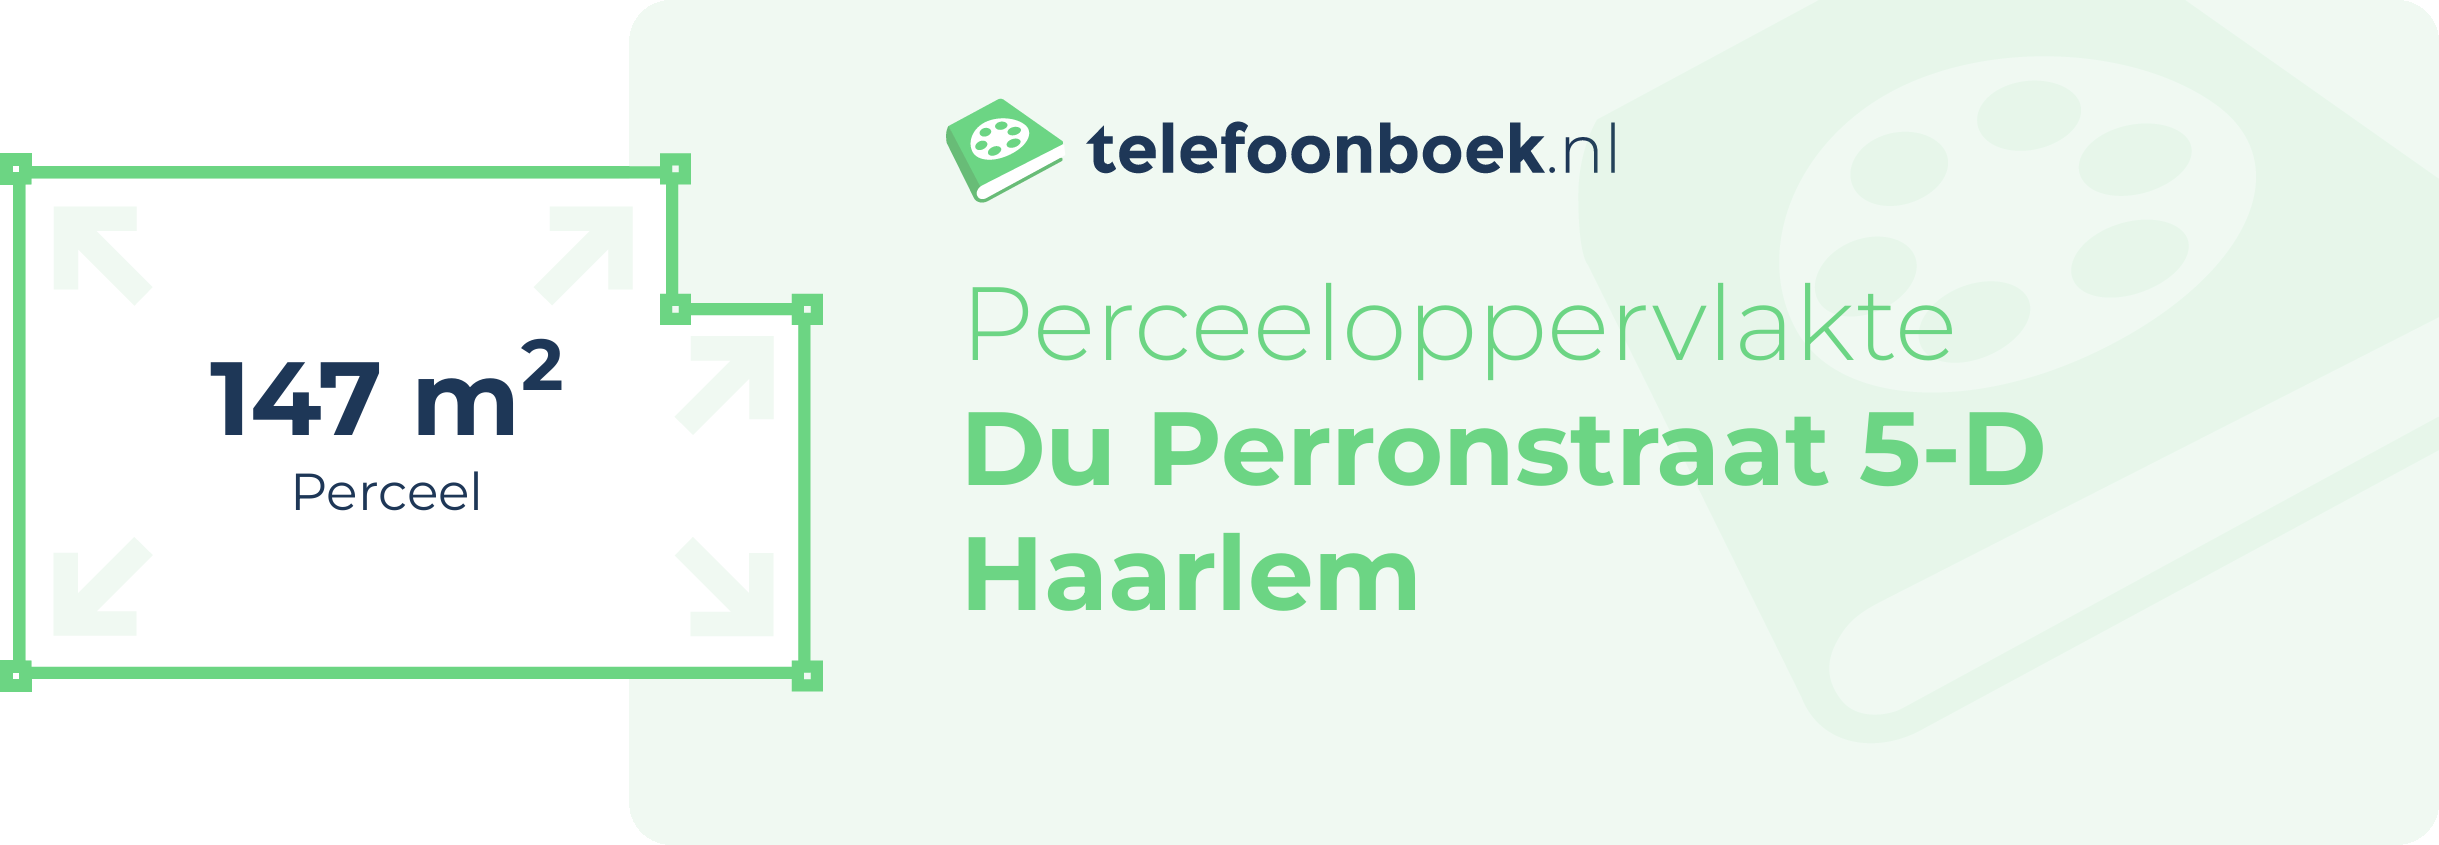 Perceeloppervlakte Du Perronstraat 5-D Haarlem